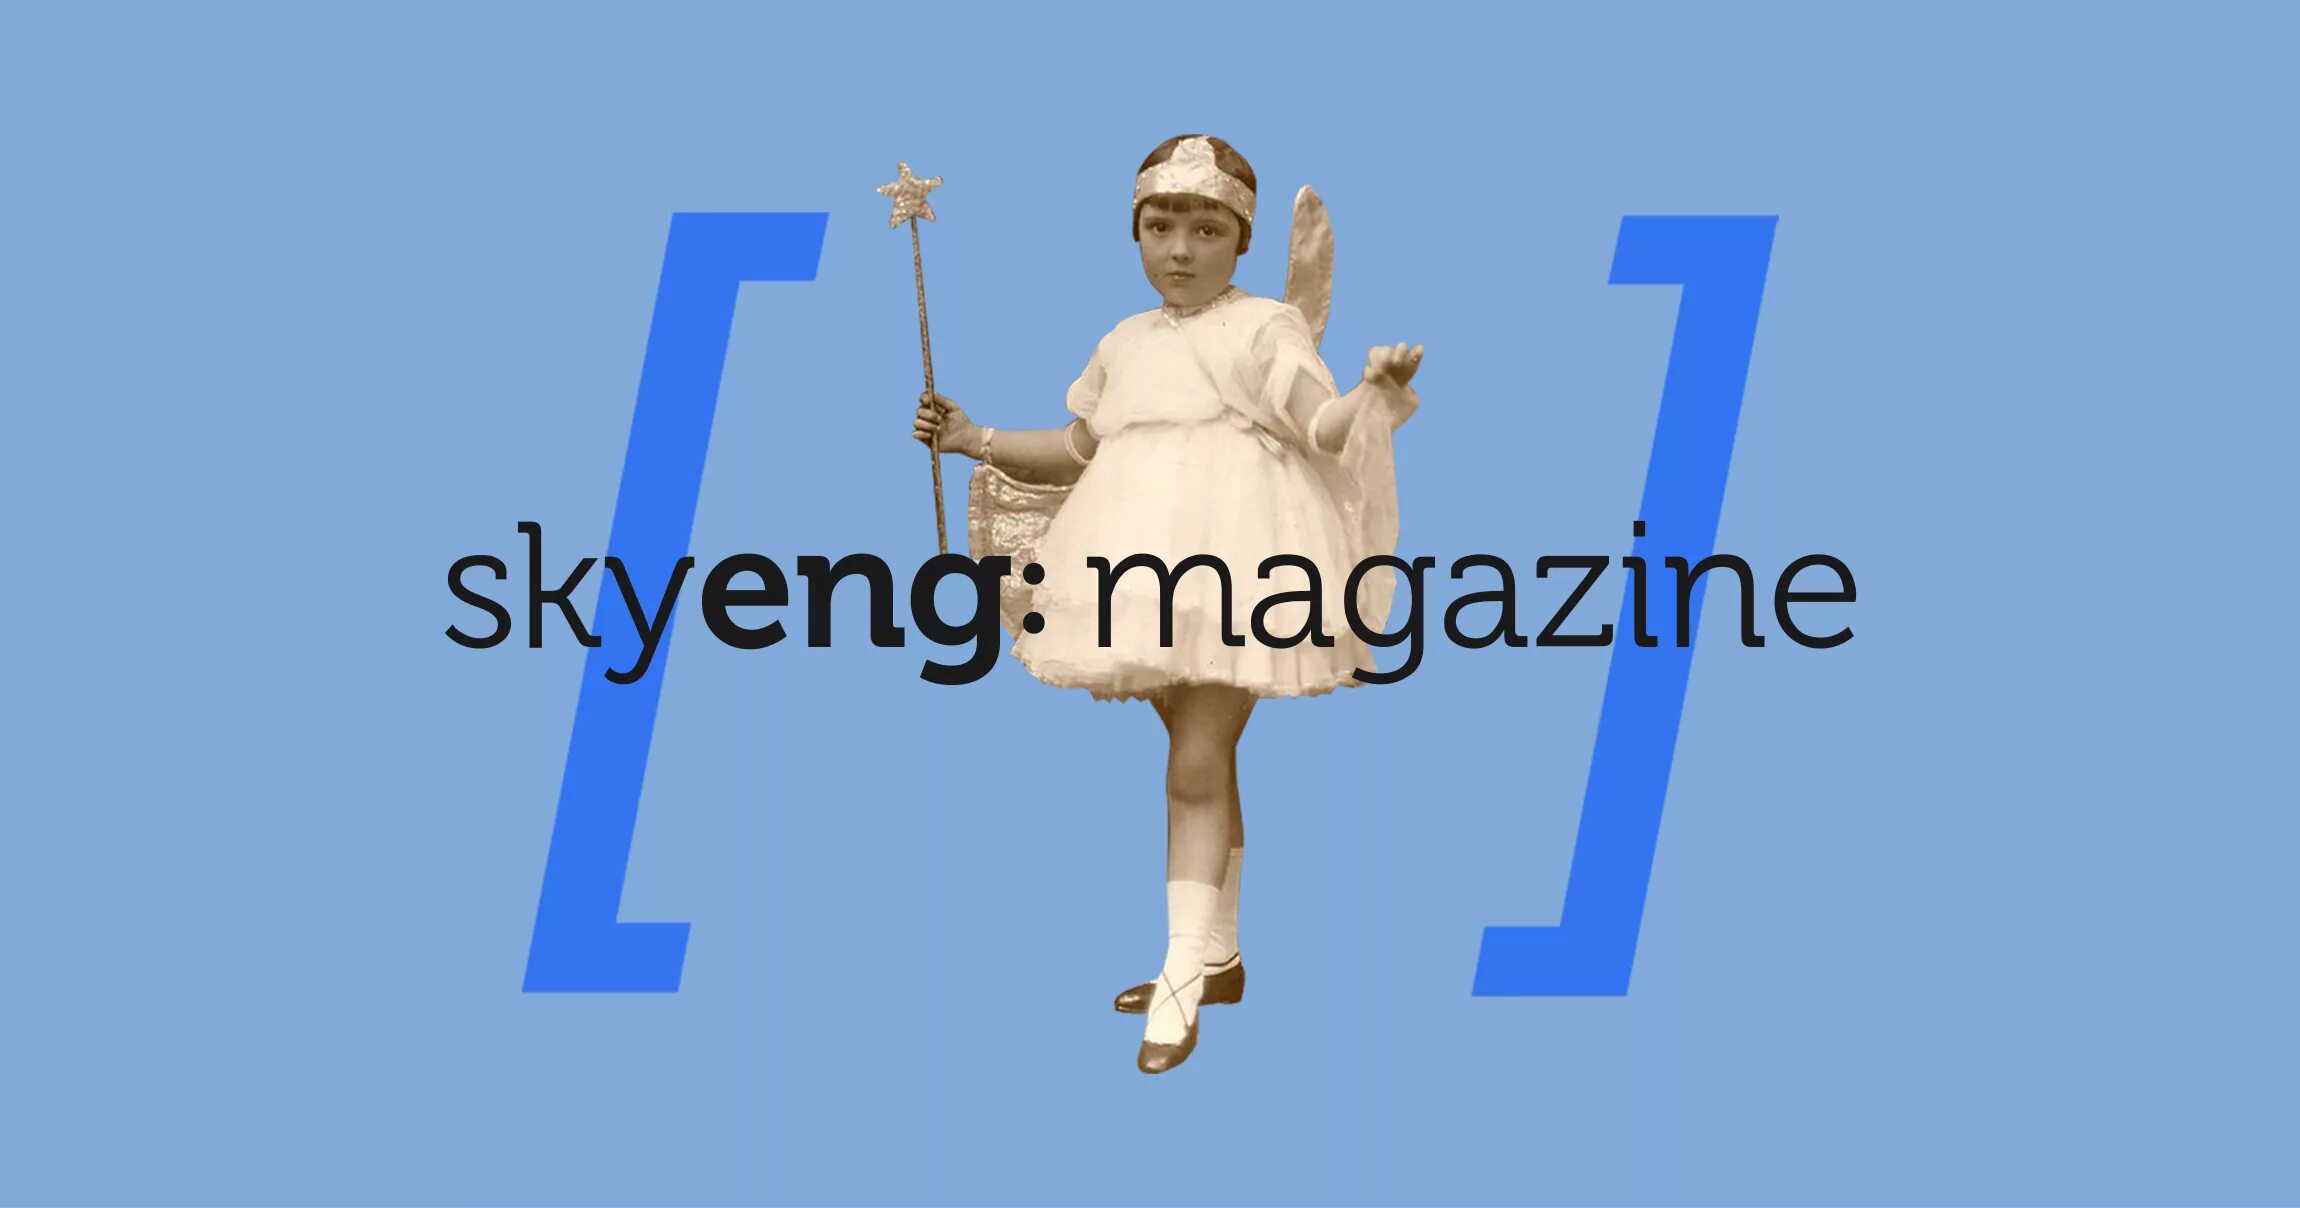 Sky eng. Skynmagazine. Скаинг Мэгэзин. Skyeng logo. Skyeng Magazine logo.